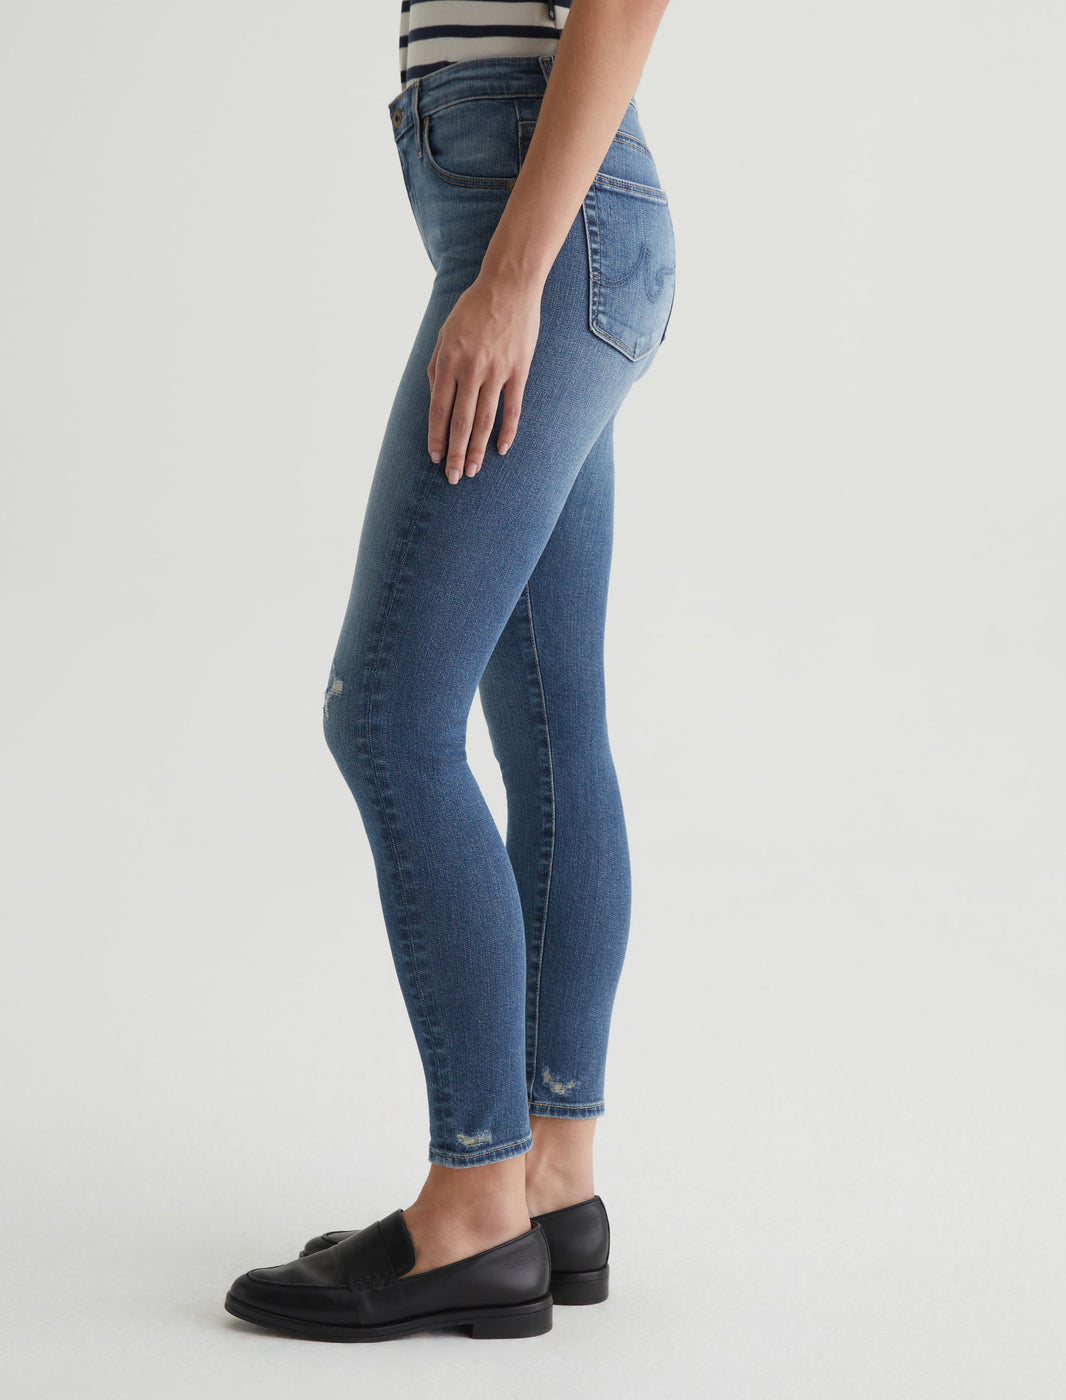 Lucky Brand Ava Raw Hem Super Skinny Jeans